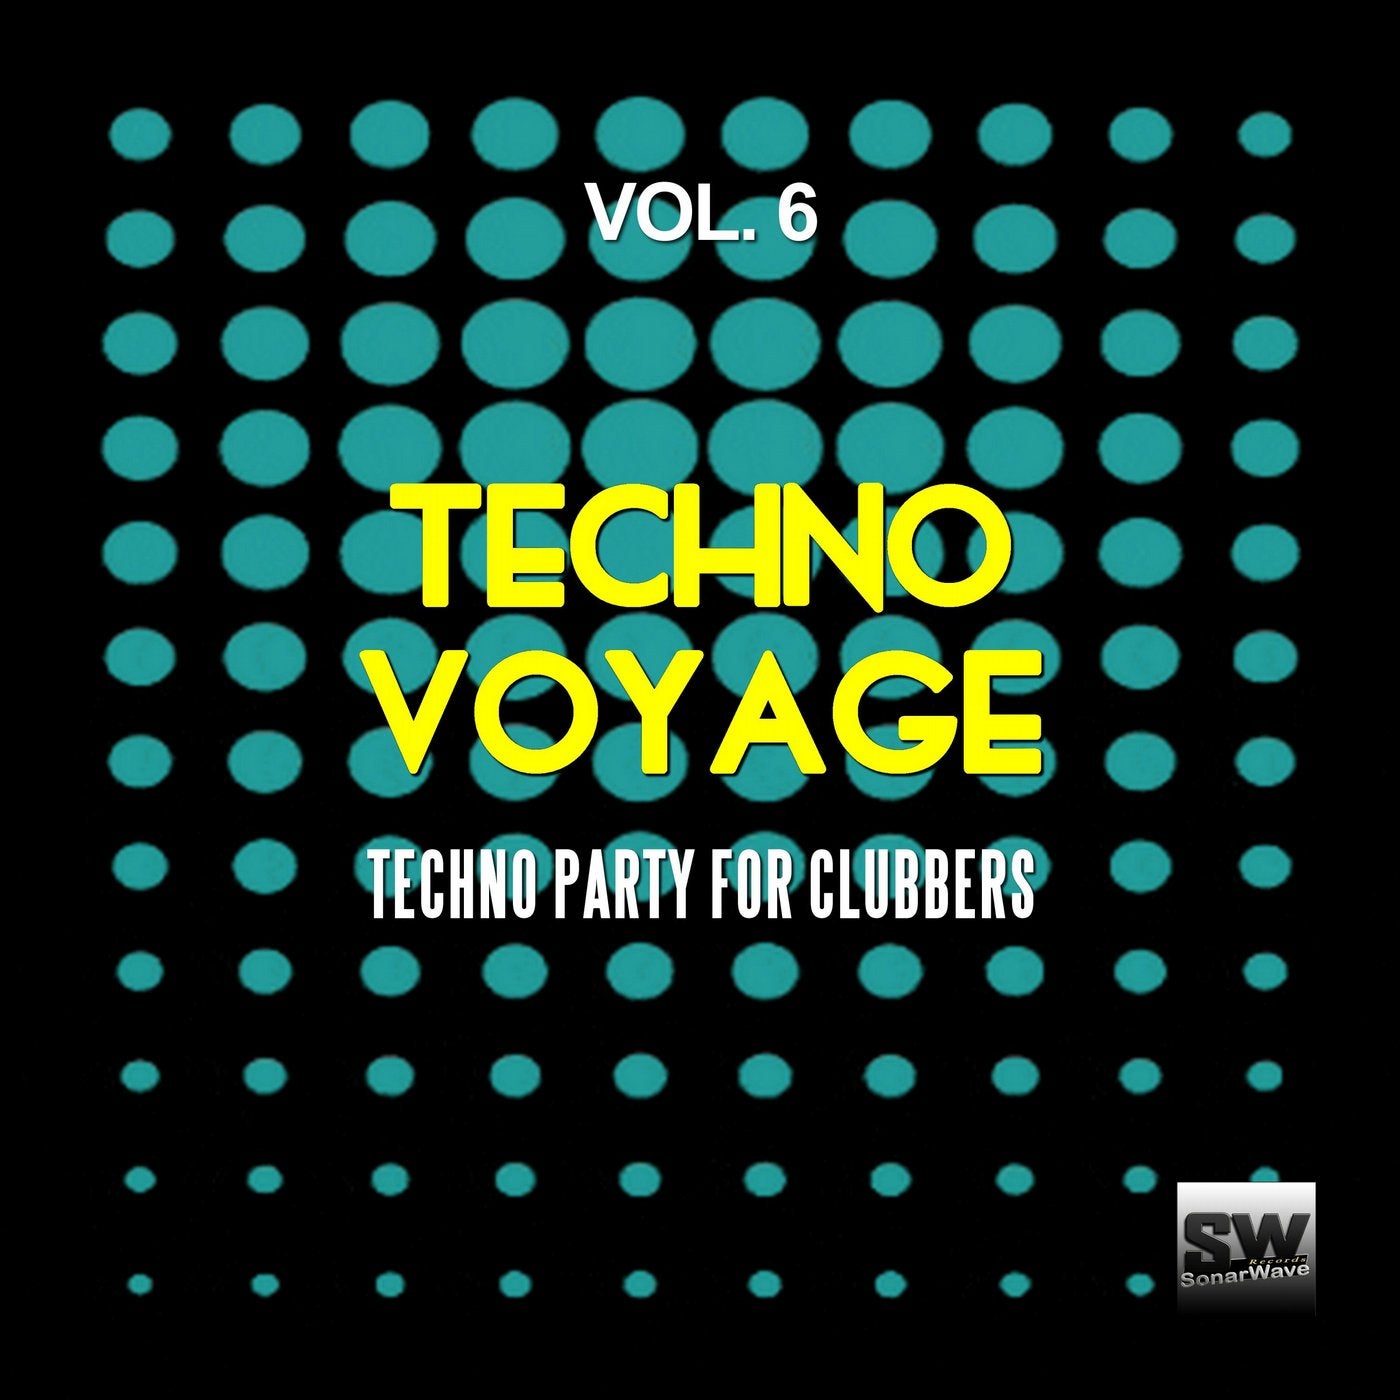 Techno Voyage, Vol. 6 (Techno Party For Clubbers)